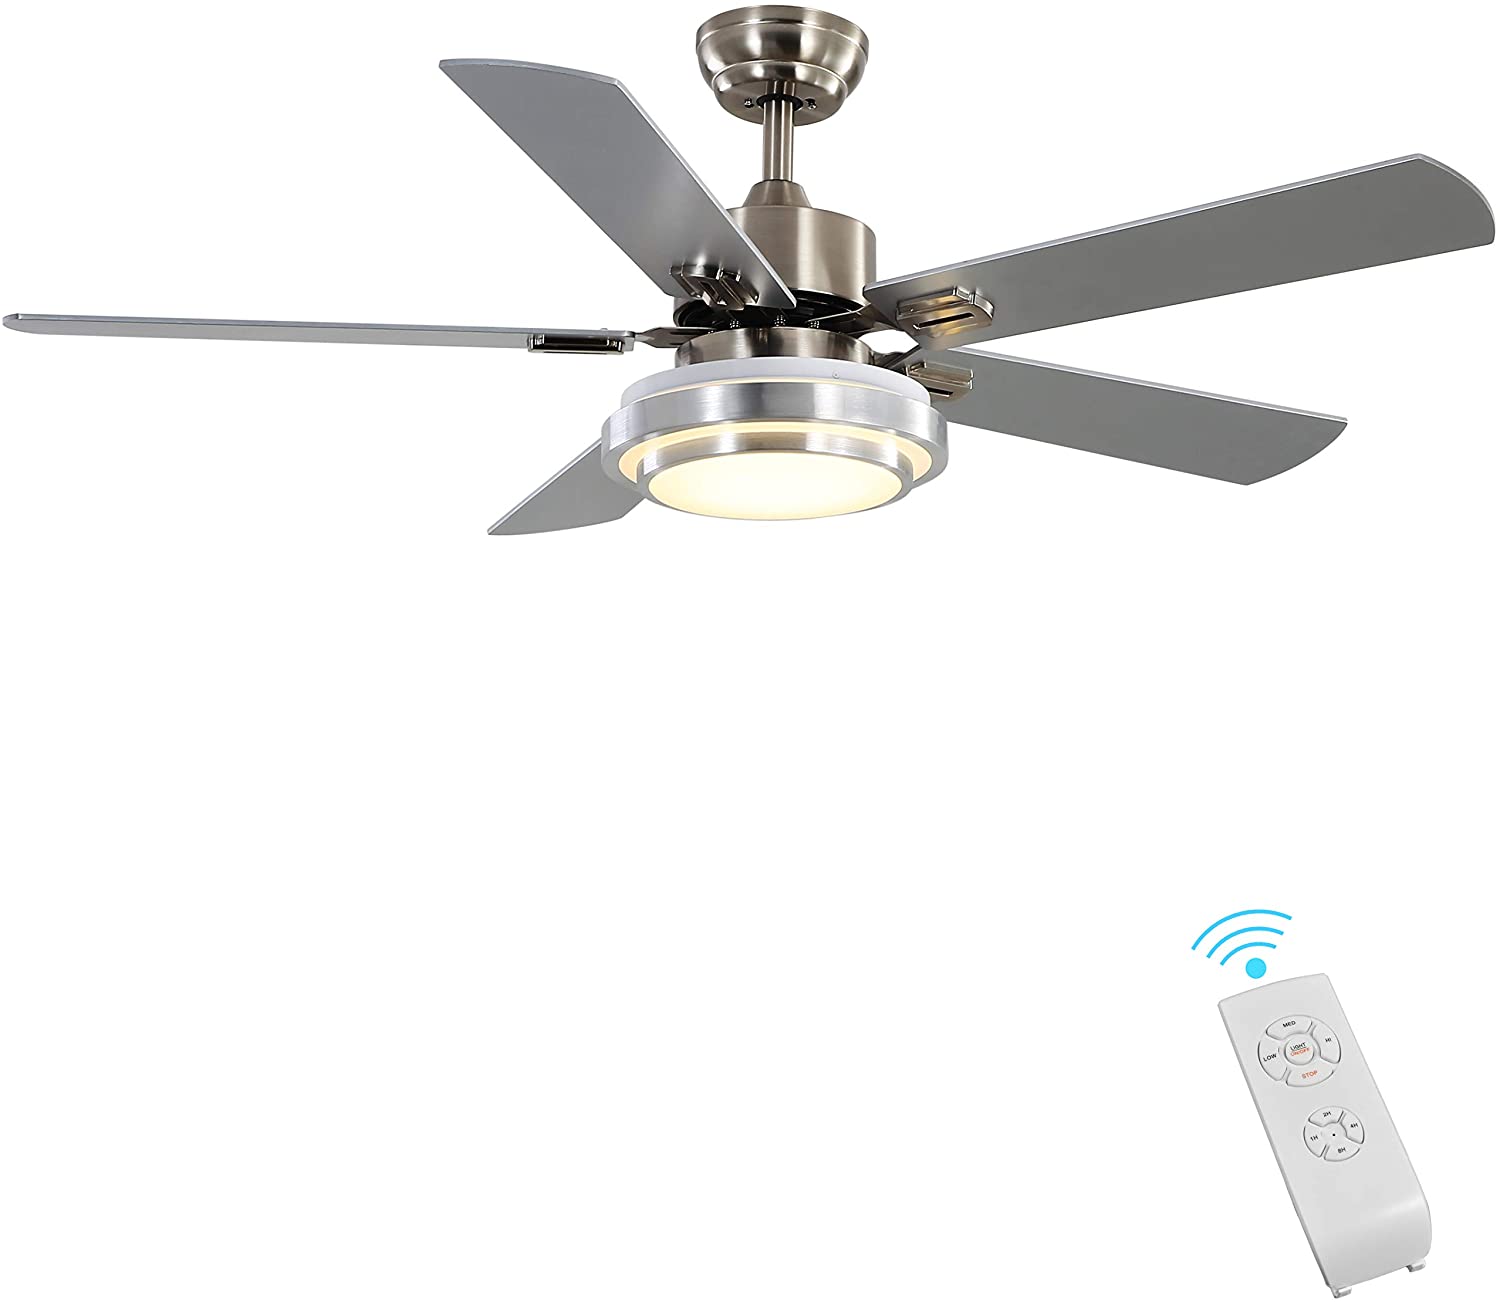 FINXIN LED Quiet Ceiling Fan For Bedroom, 52-Inch